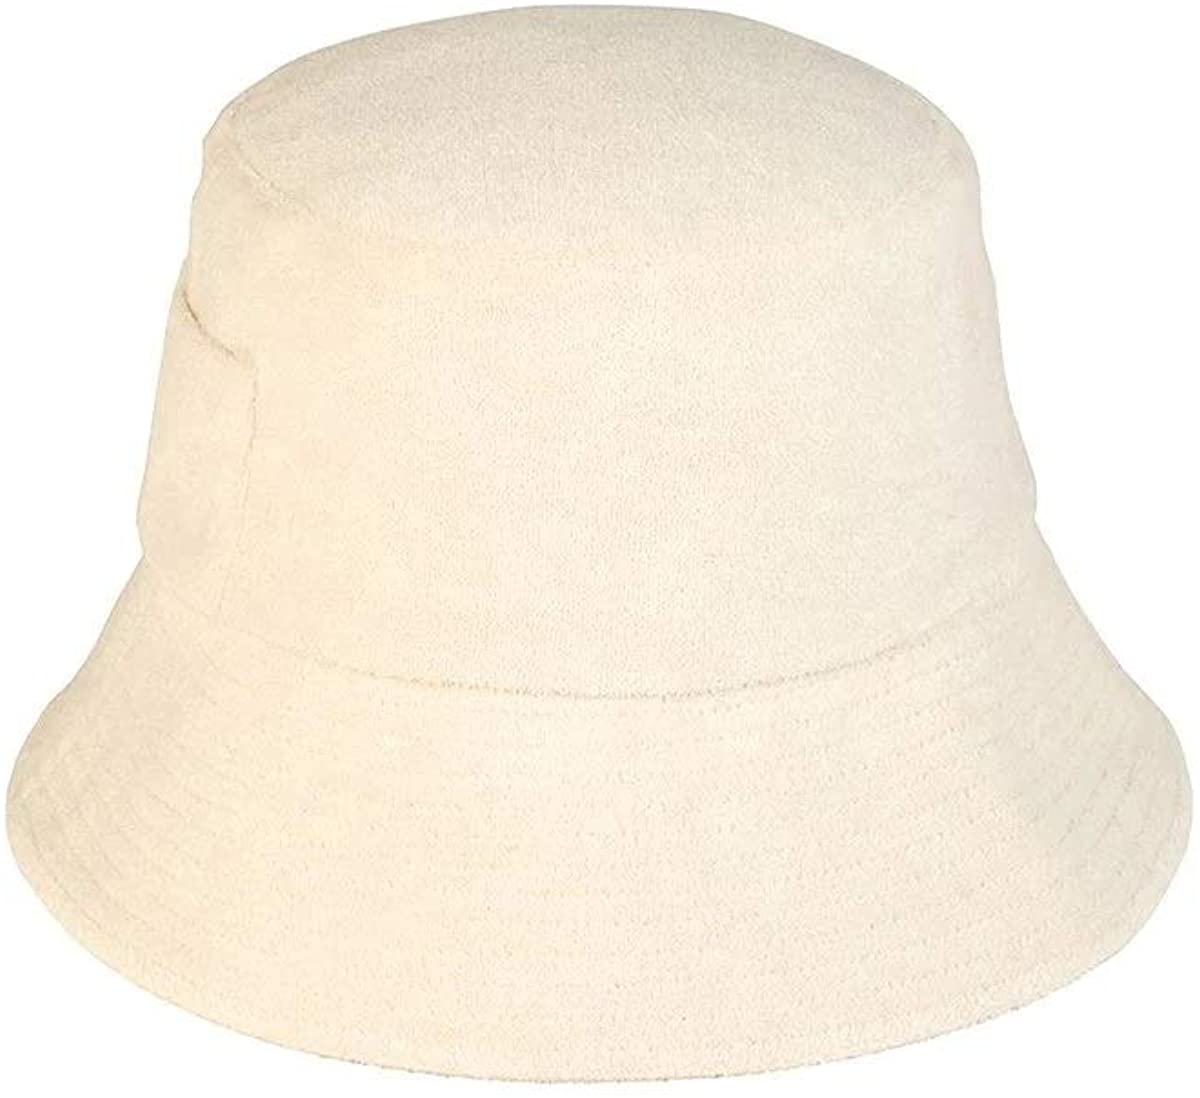 TOPONE ACCESSORIES LIMITED Custom 100% Cotton Terrycloth Bucket Hat Topone Accessories Ltd. 